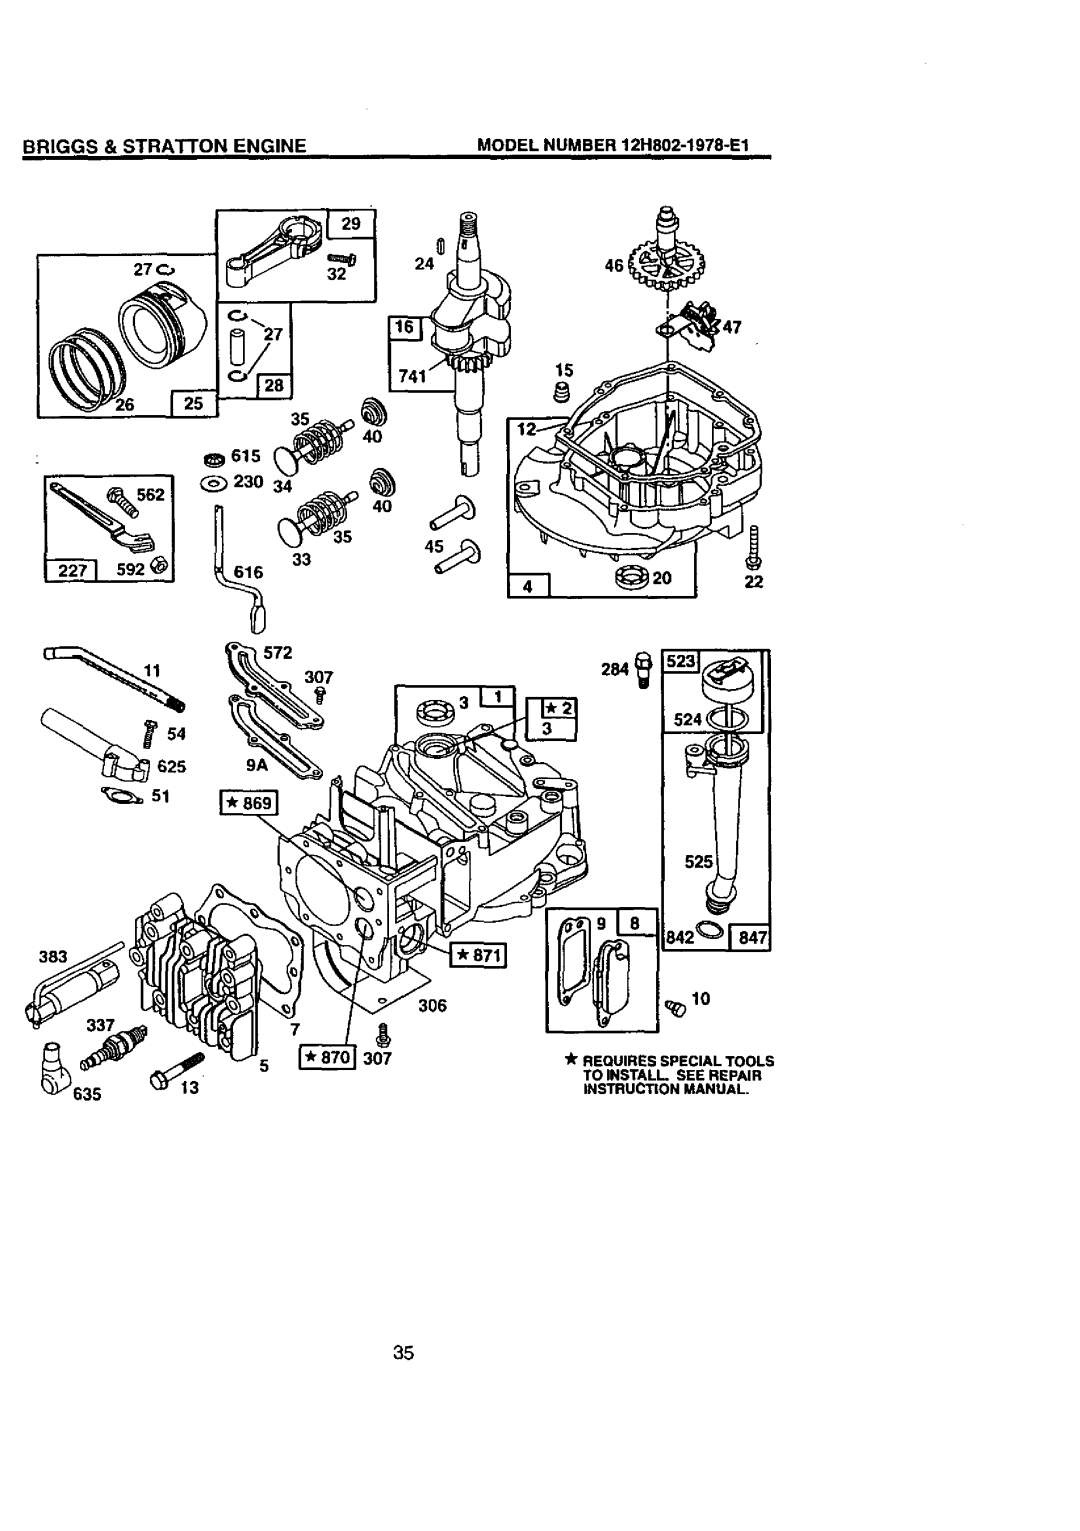 Craftsman 917.38823 owner manual Briggs & Stratton Engine, MODEL NUMBER 12H802-1978-E1, 6259 